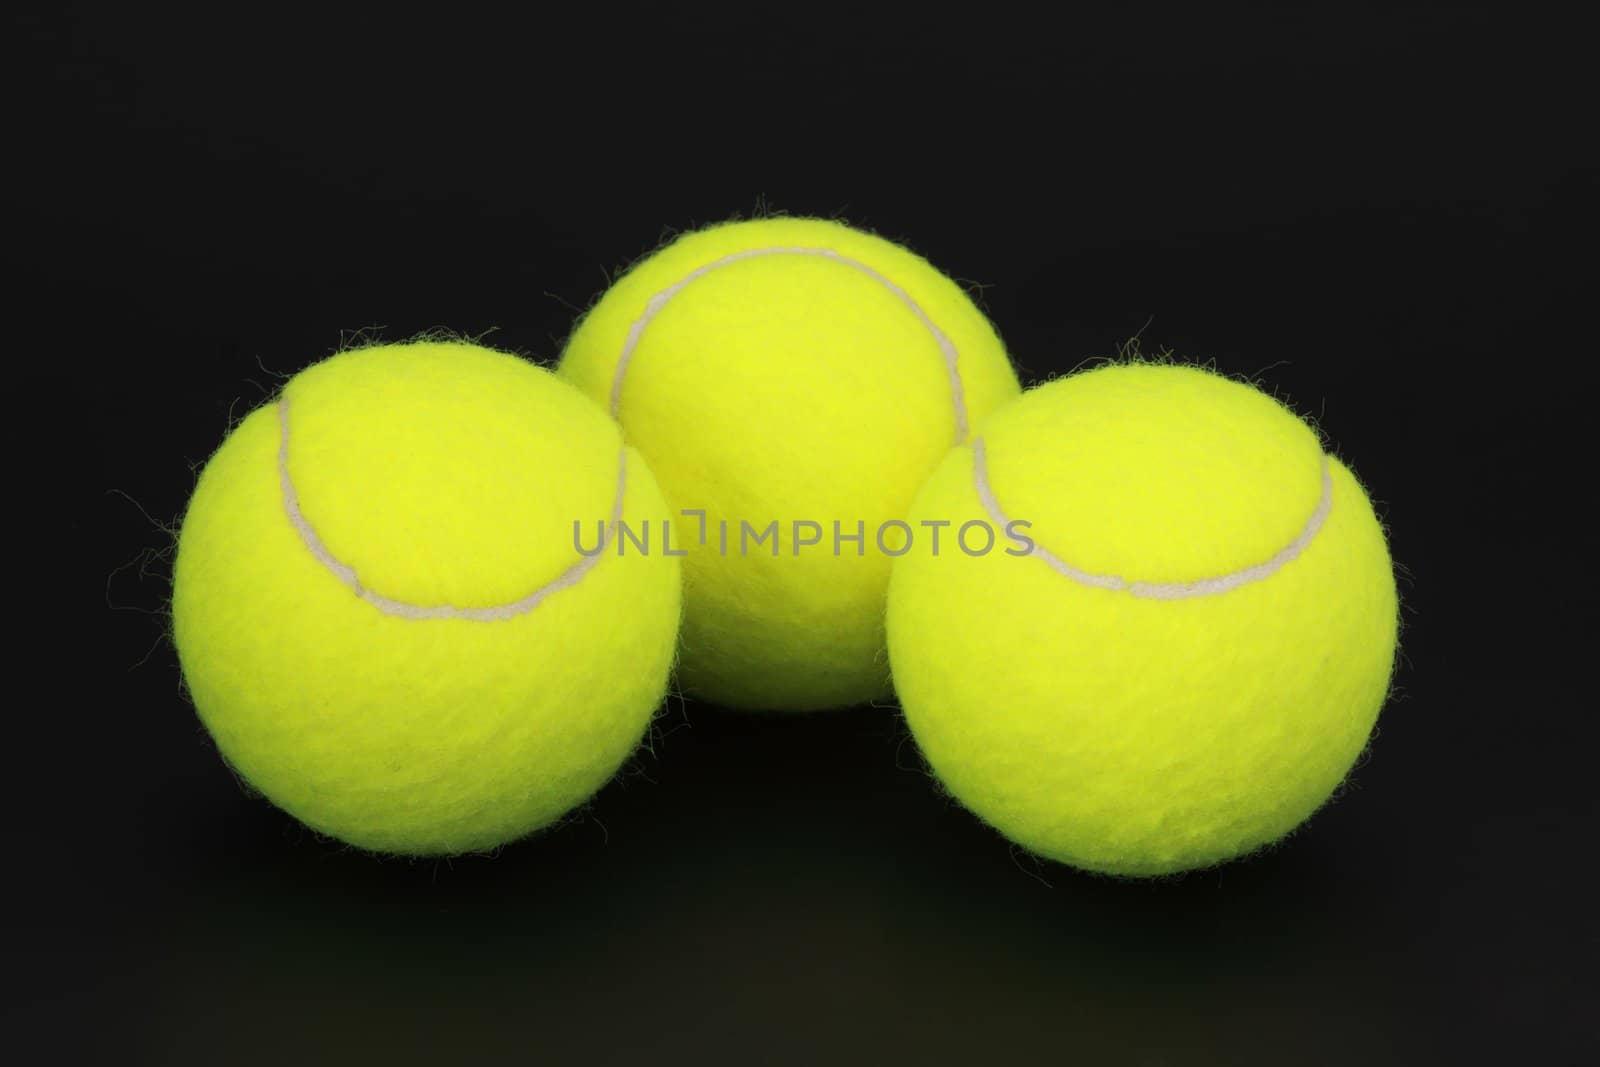 tennis balls by lanalanglois